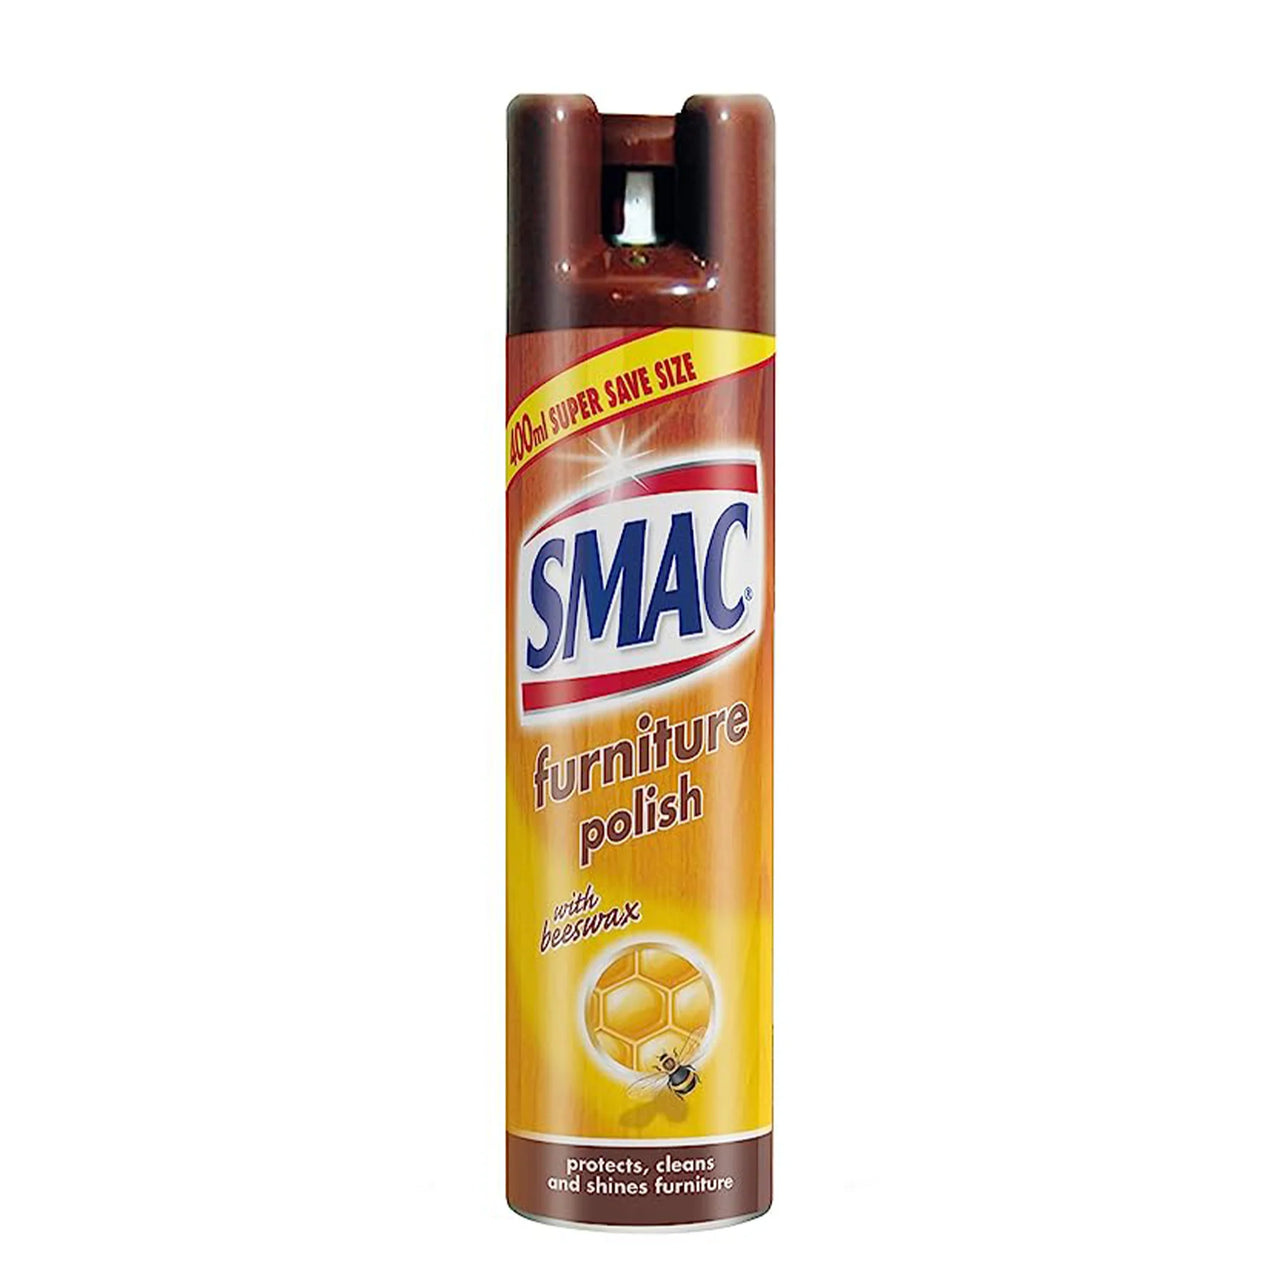 SMAC-Furniture Polish Spray-400ml